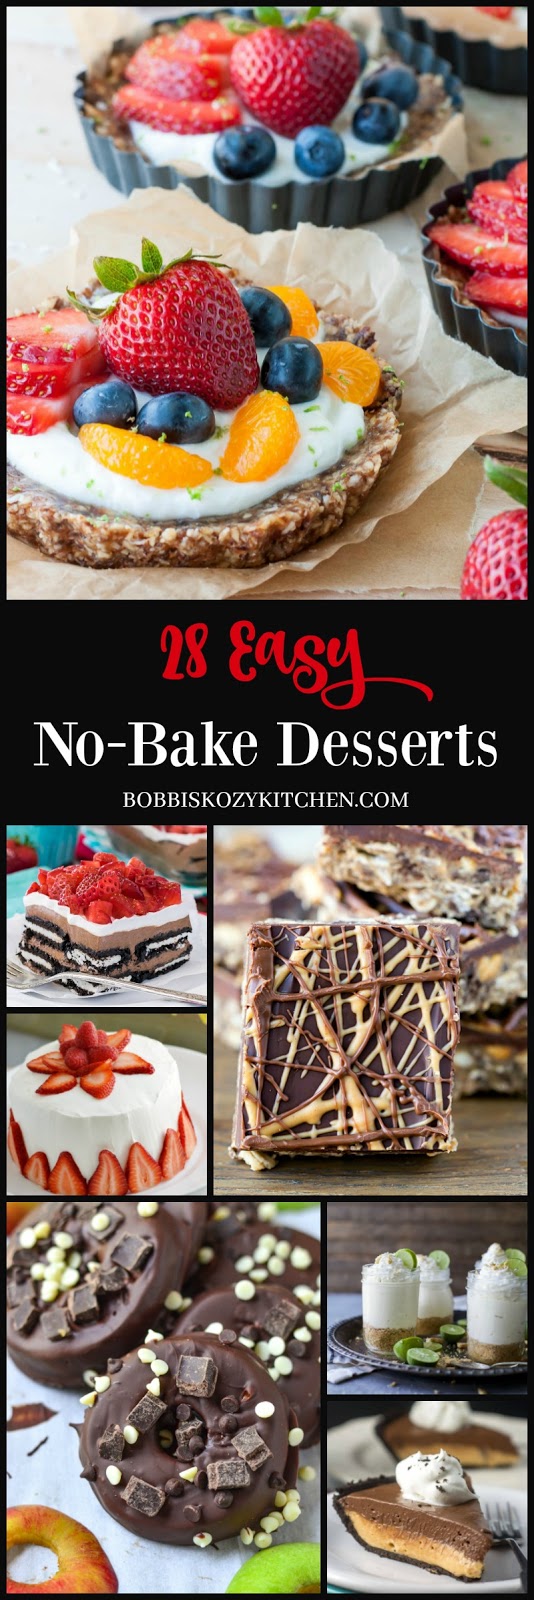 28 Ridiculously Easy No-Bake Desserts from www.bobbiskozykitchen.com